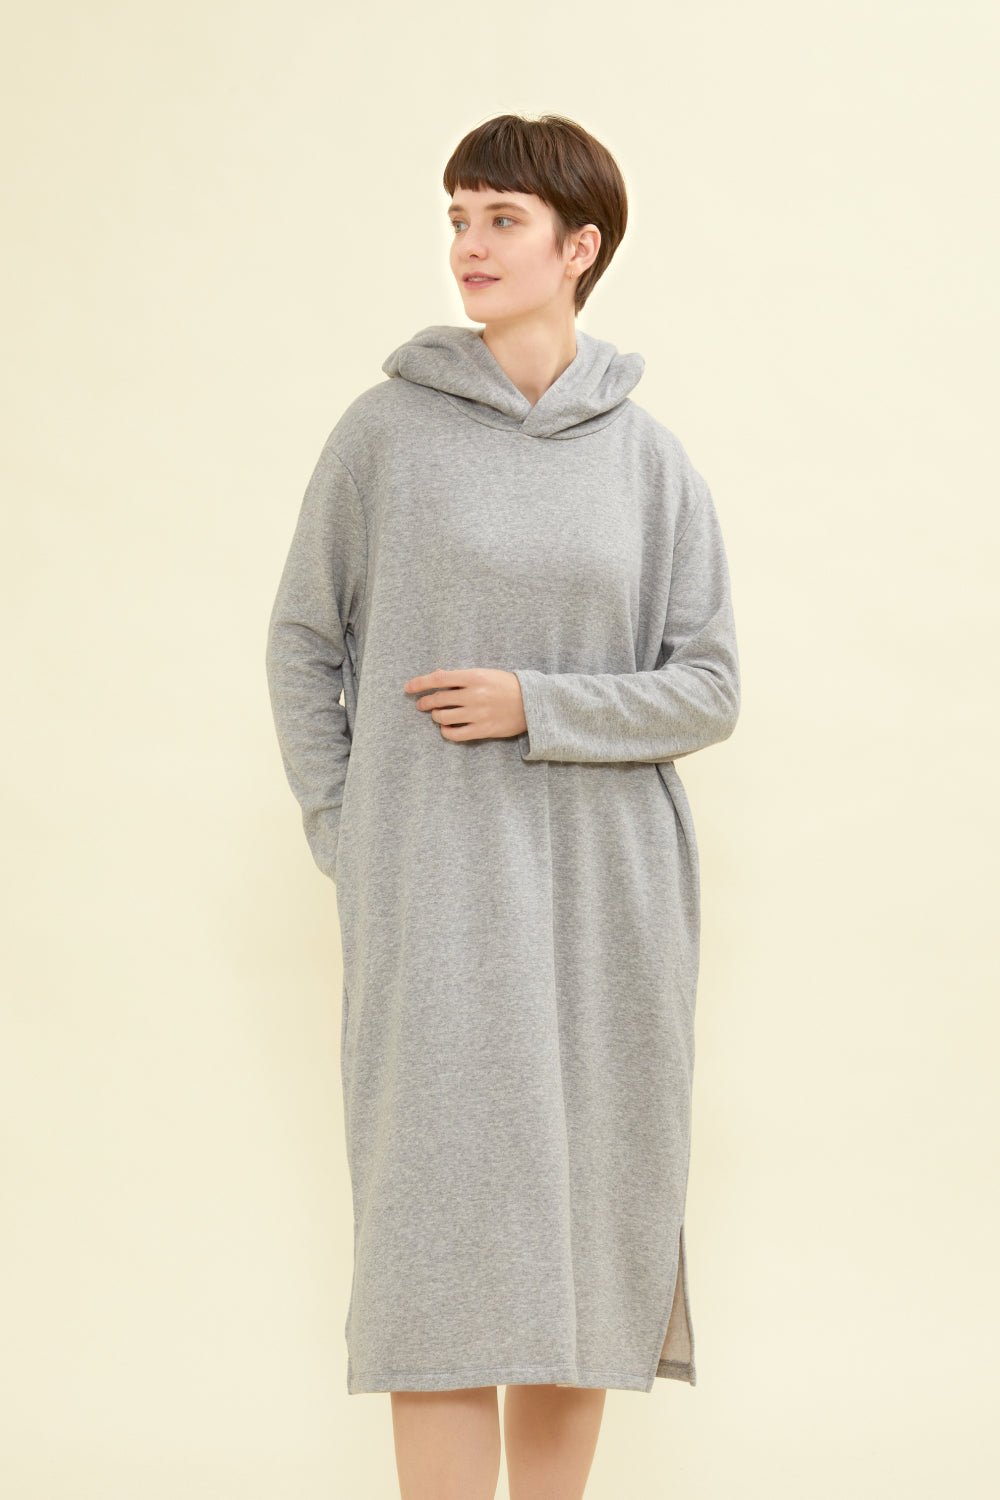 Nursing dress with fleece lining, Maternity dress / Nursing dress